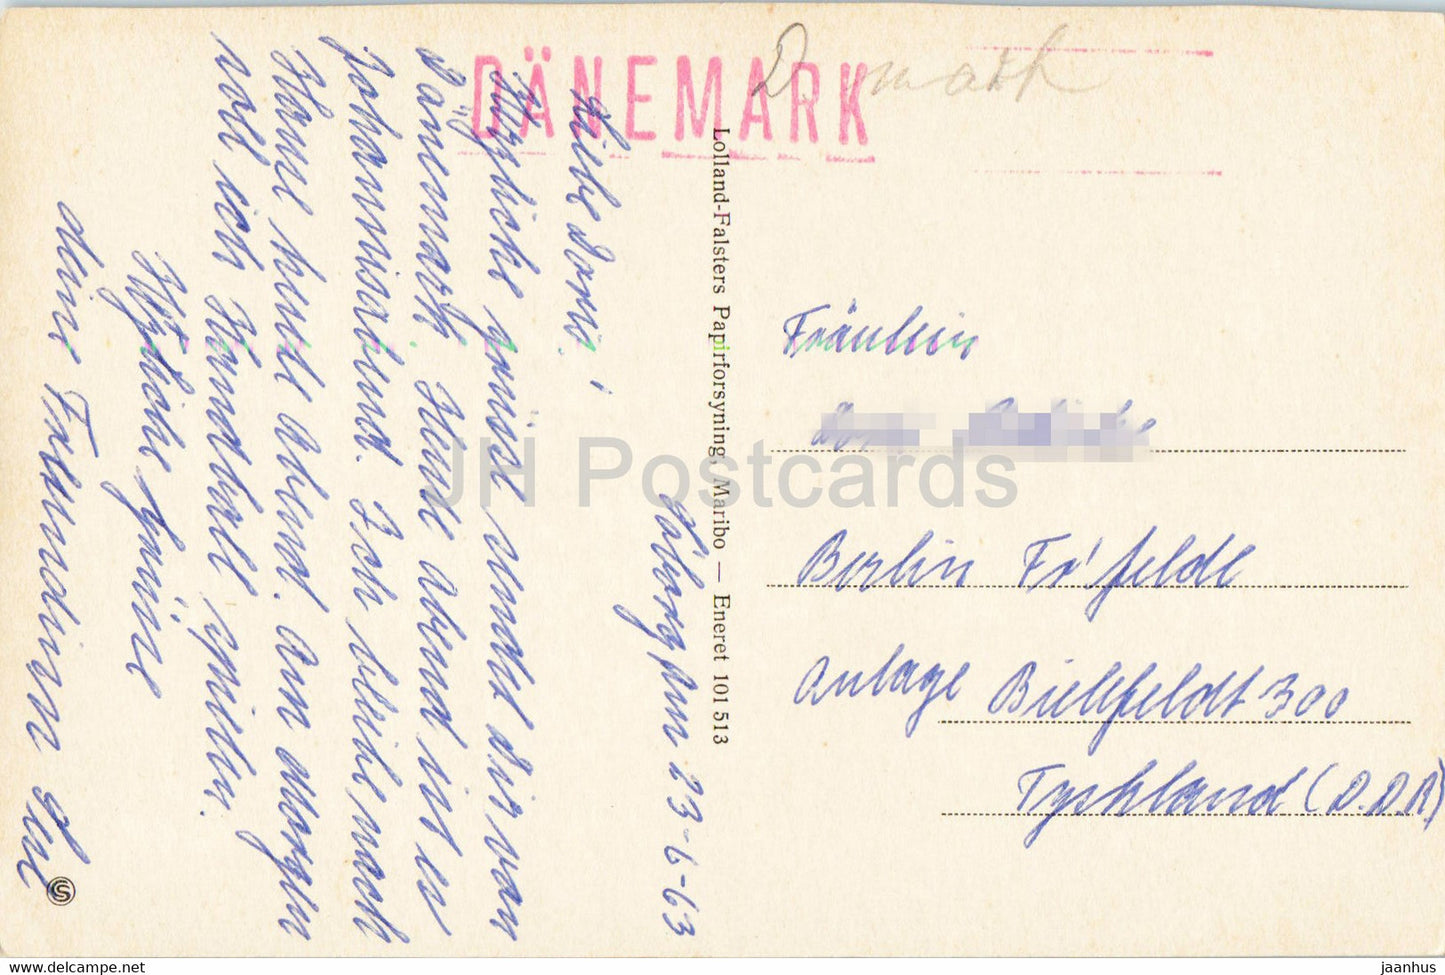 Havnevej - Rodby Havn - carte postale ancienne - 1963 - Danemark - utilisé